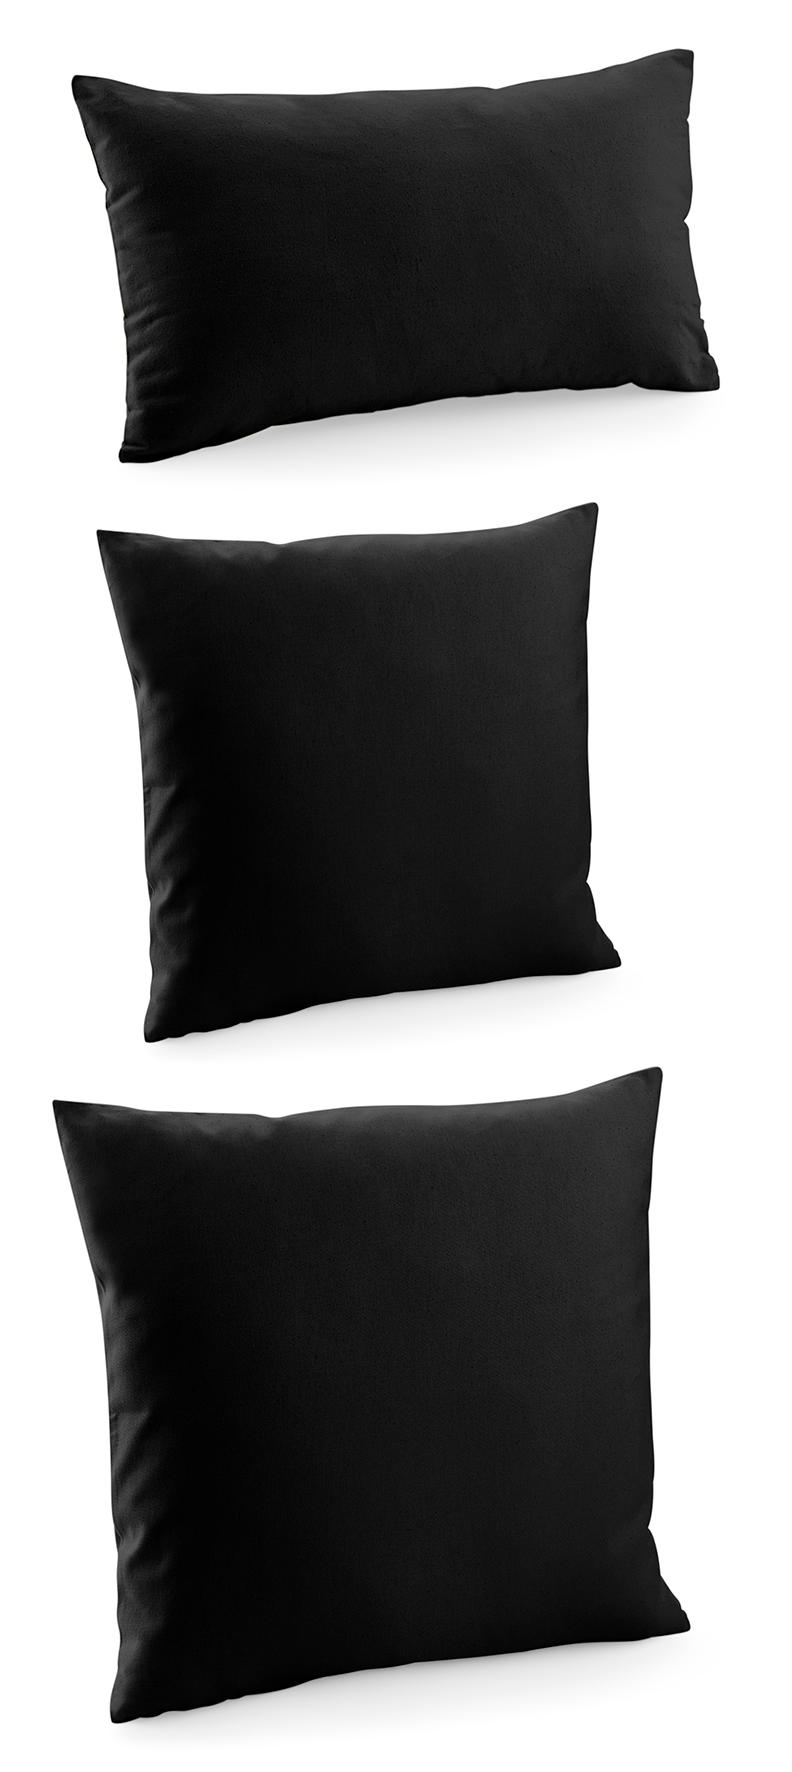  Fairtrade Cotton Canvas Cushion Cover in Farbe Black 